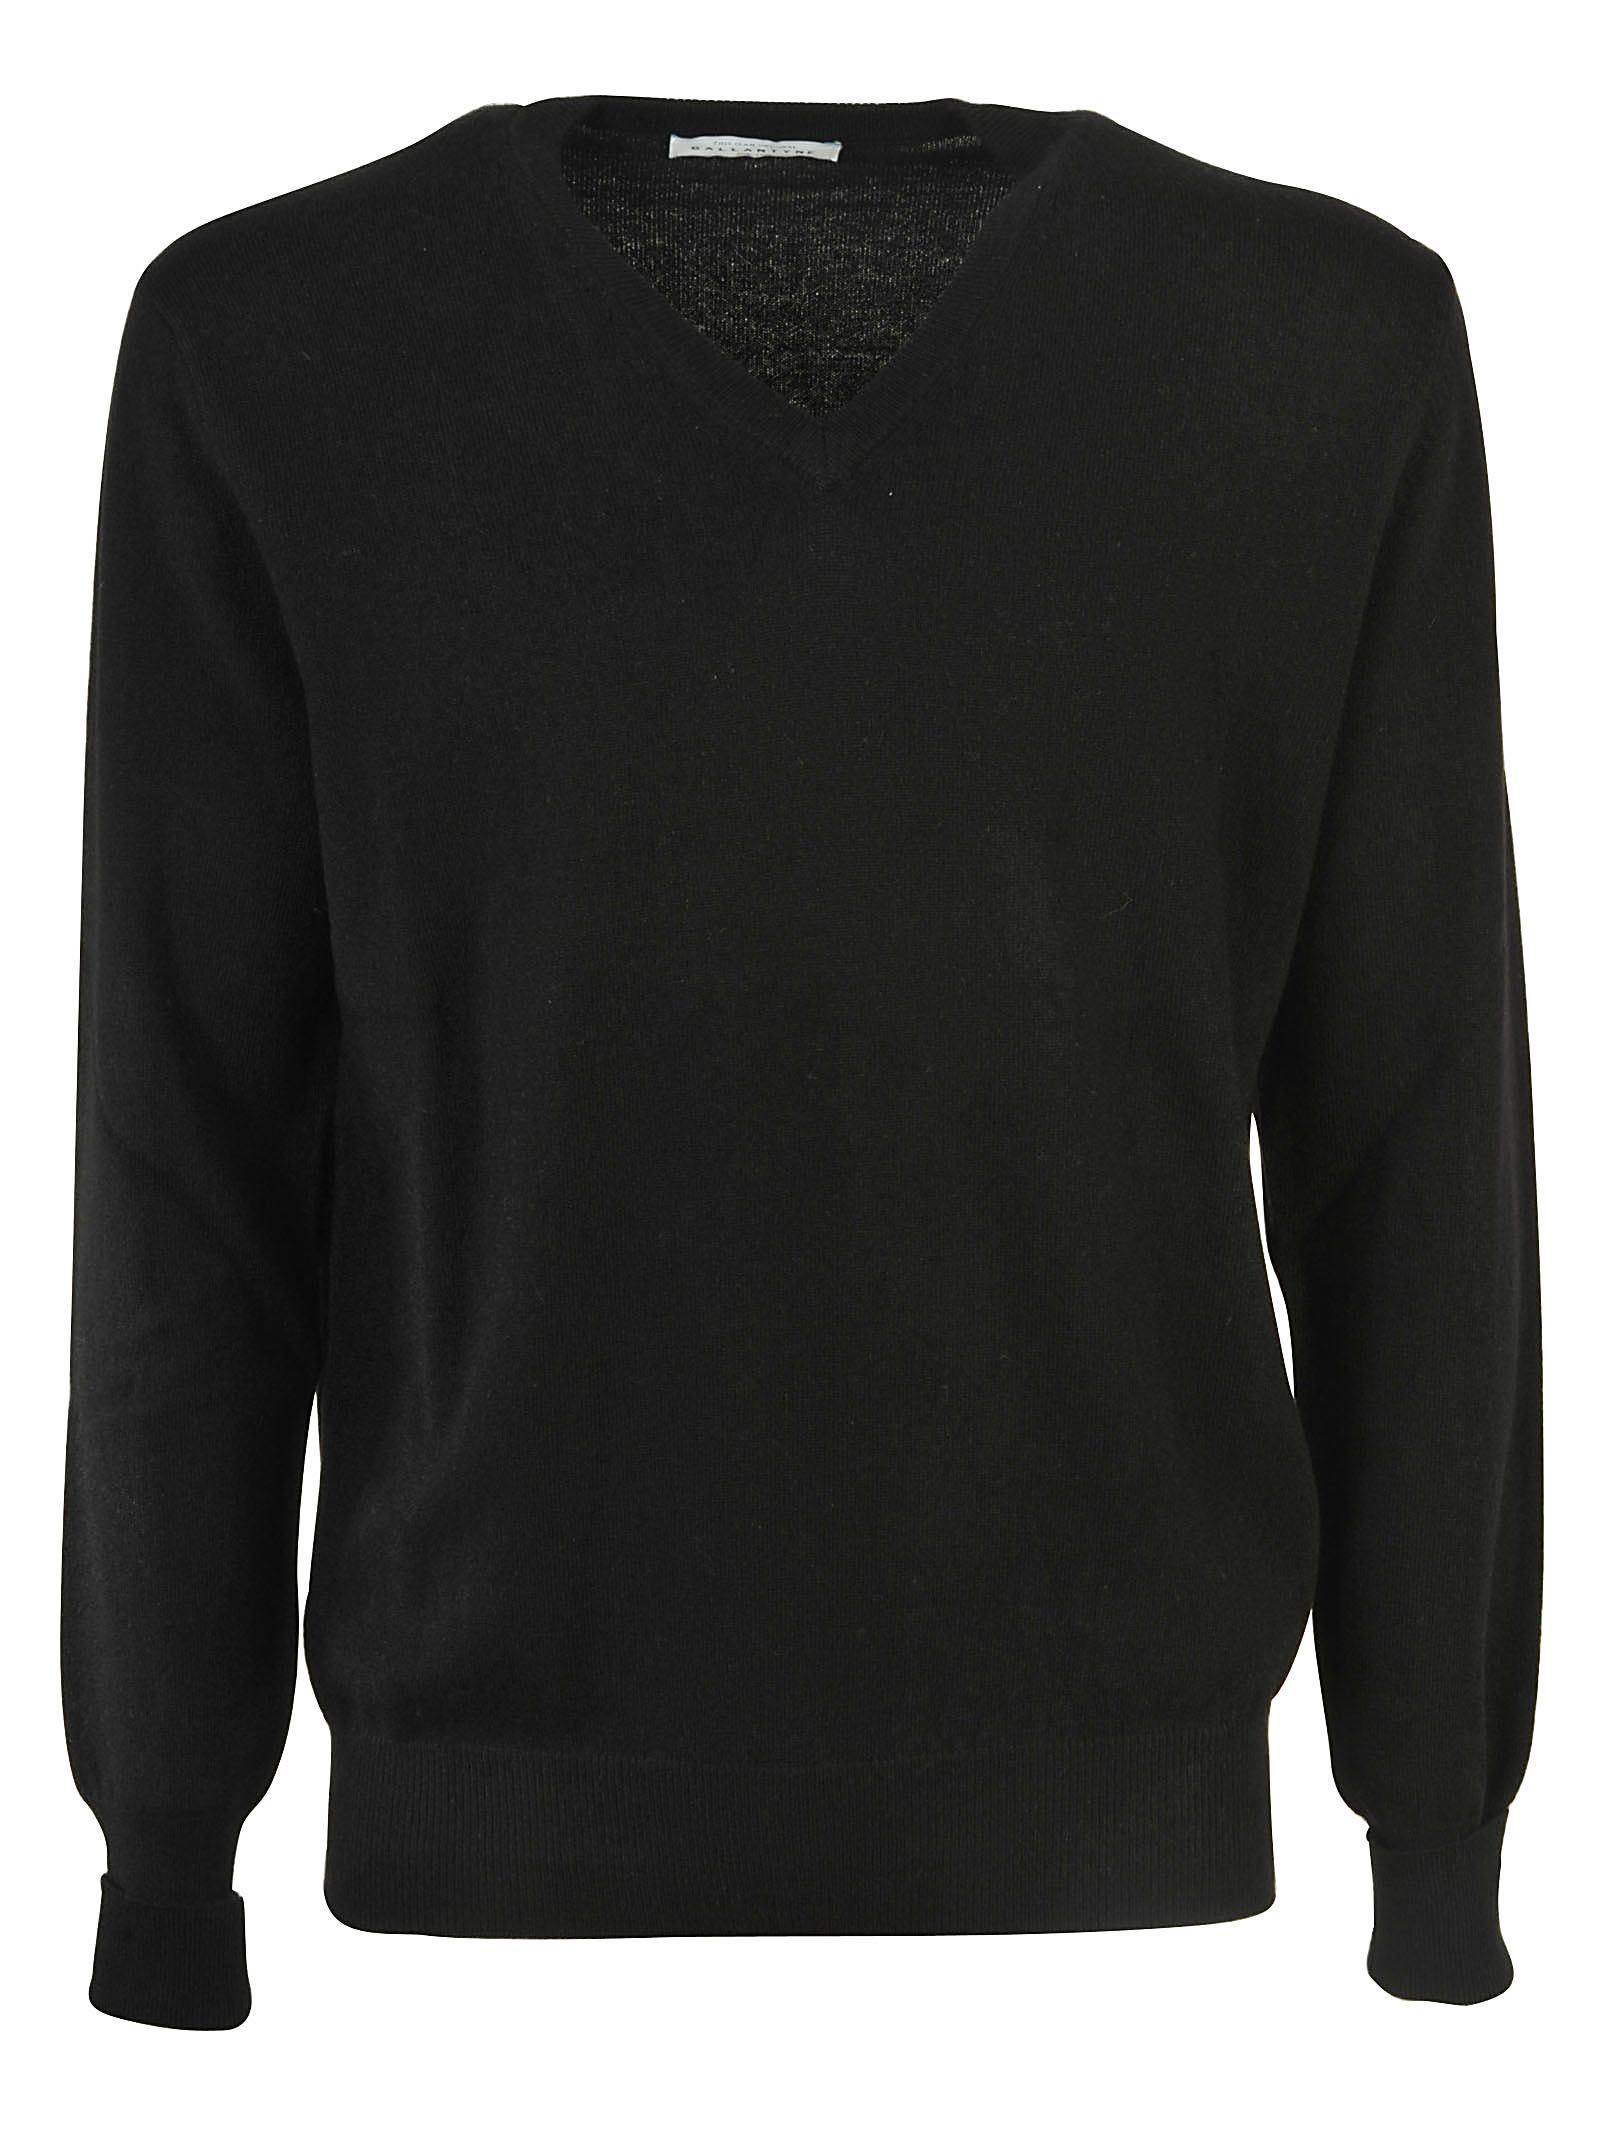 Ballantyne - Ballantyne Cashmere Sweater - Black, Men's Sweaters | Italist